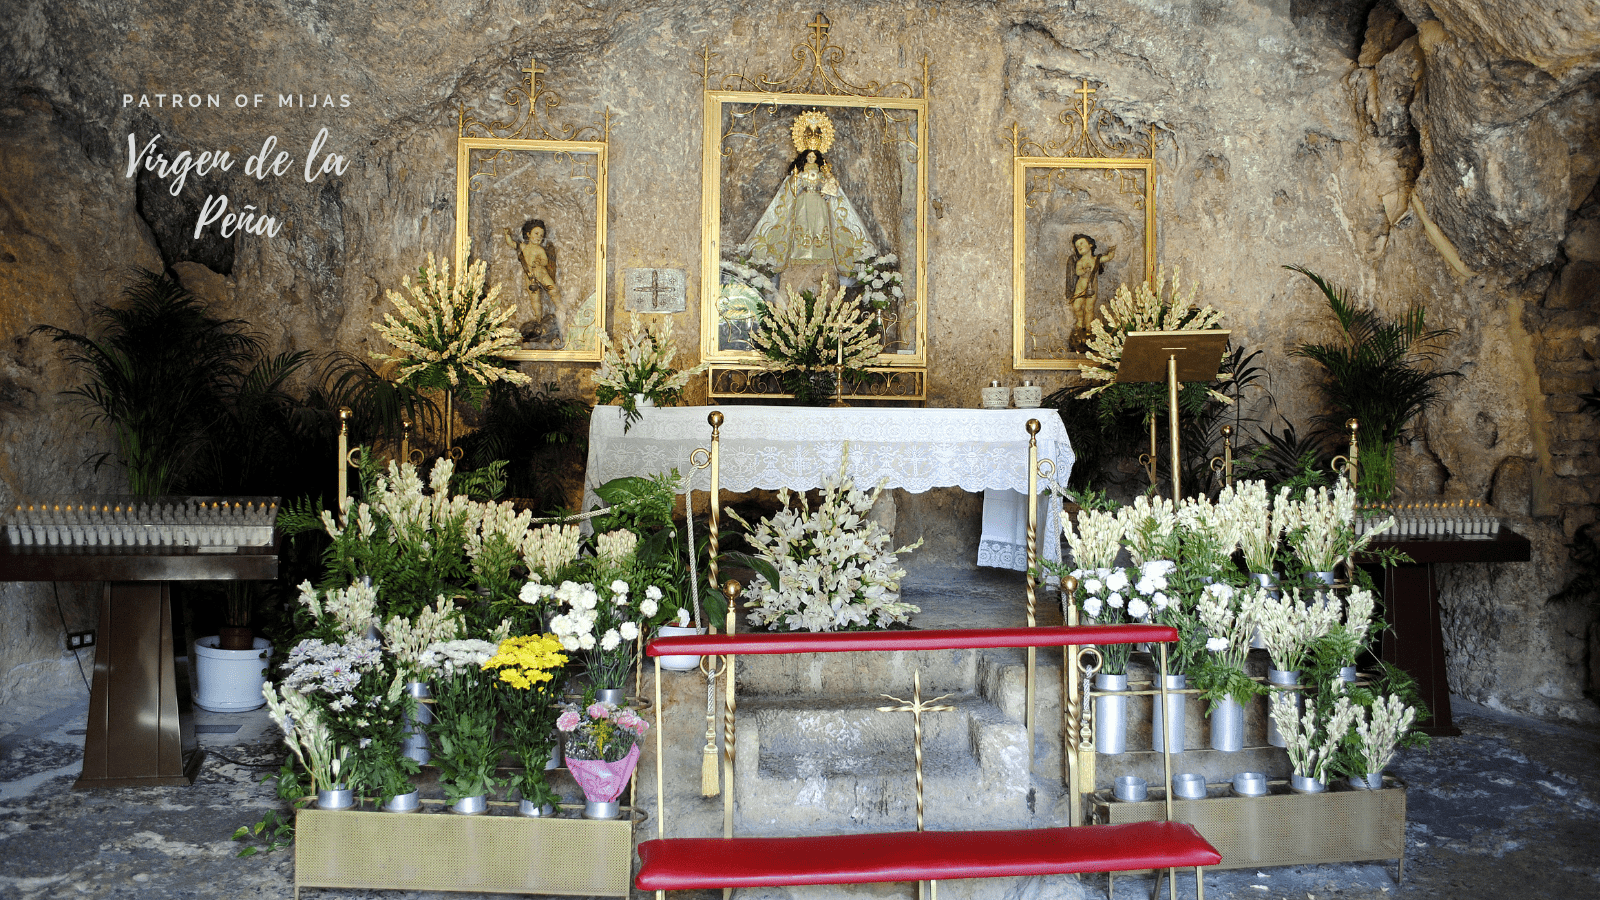 Virgen de la Pena patron of Mijas